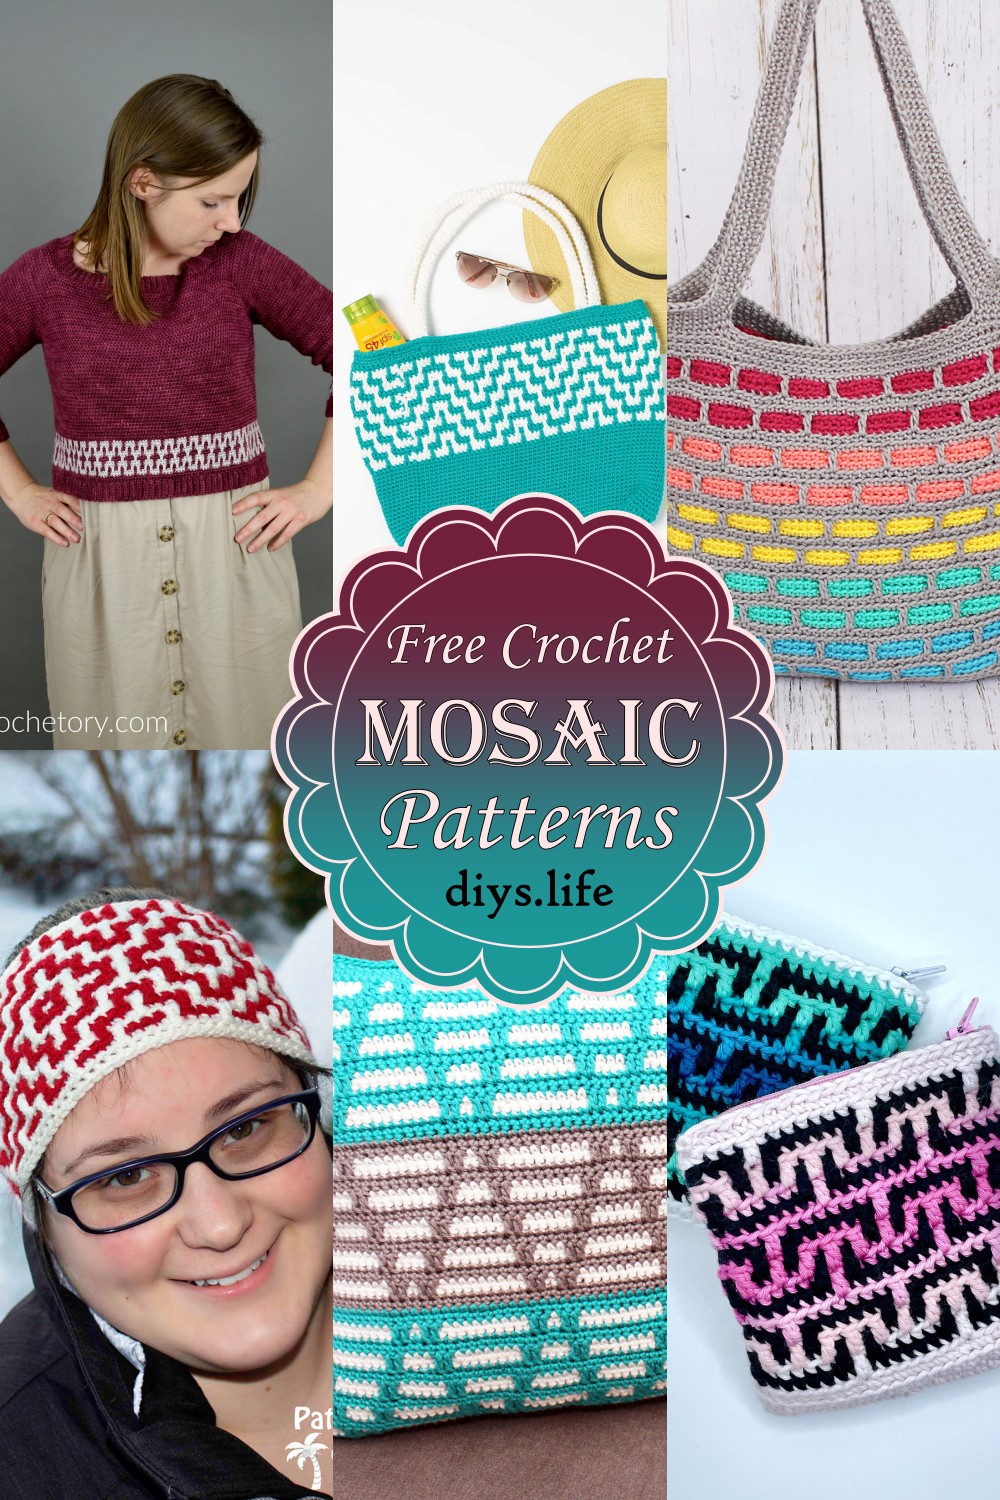 Mosaic Crochet Patterns